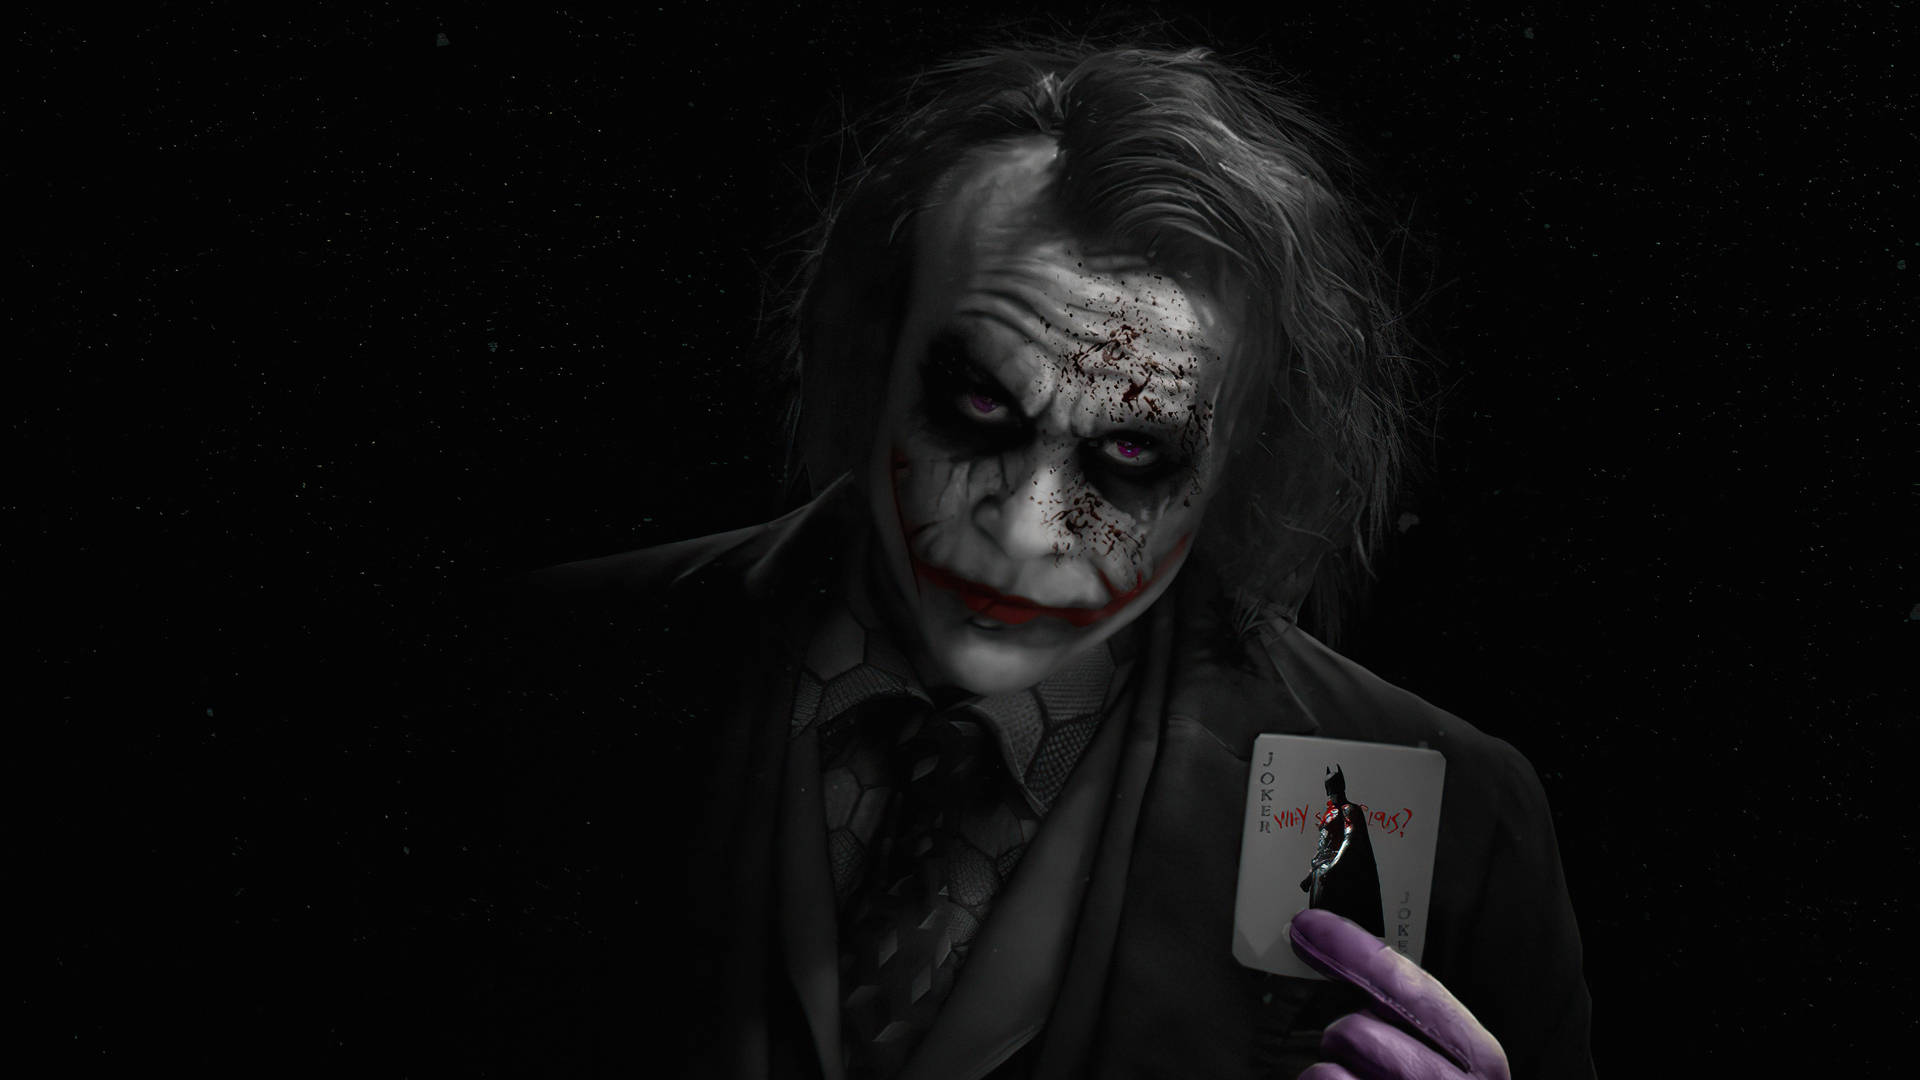 Heath Ledger In Black Ultra Hd Joker Costume Picture